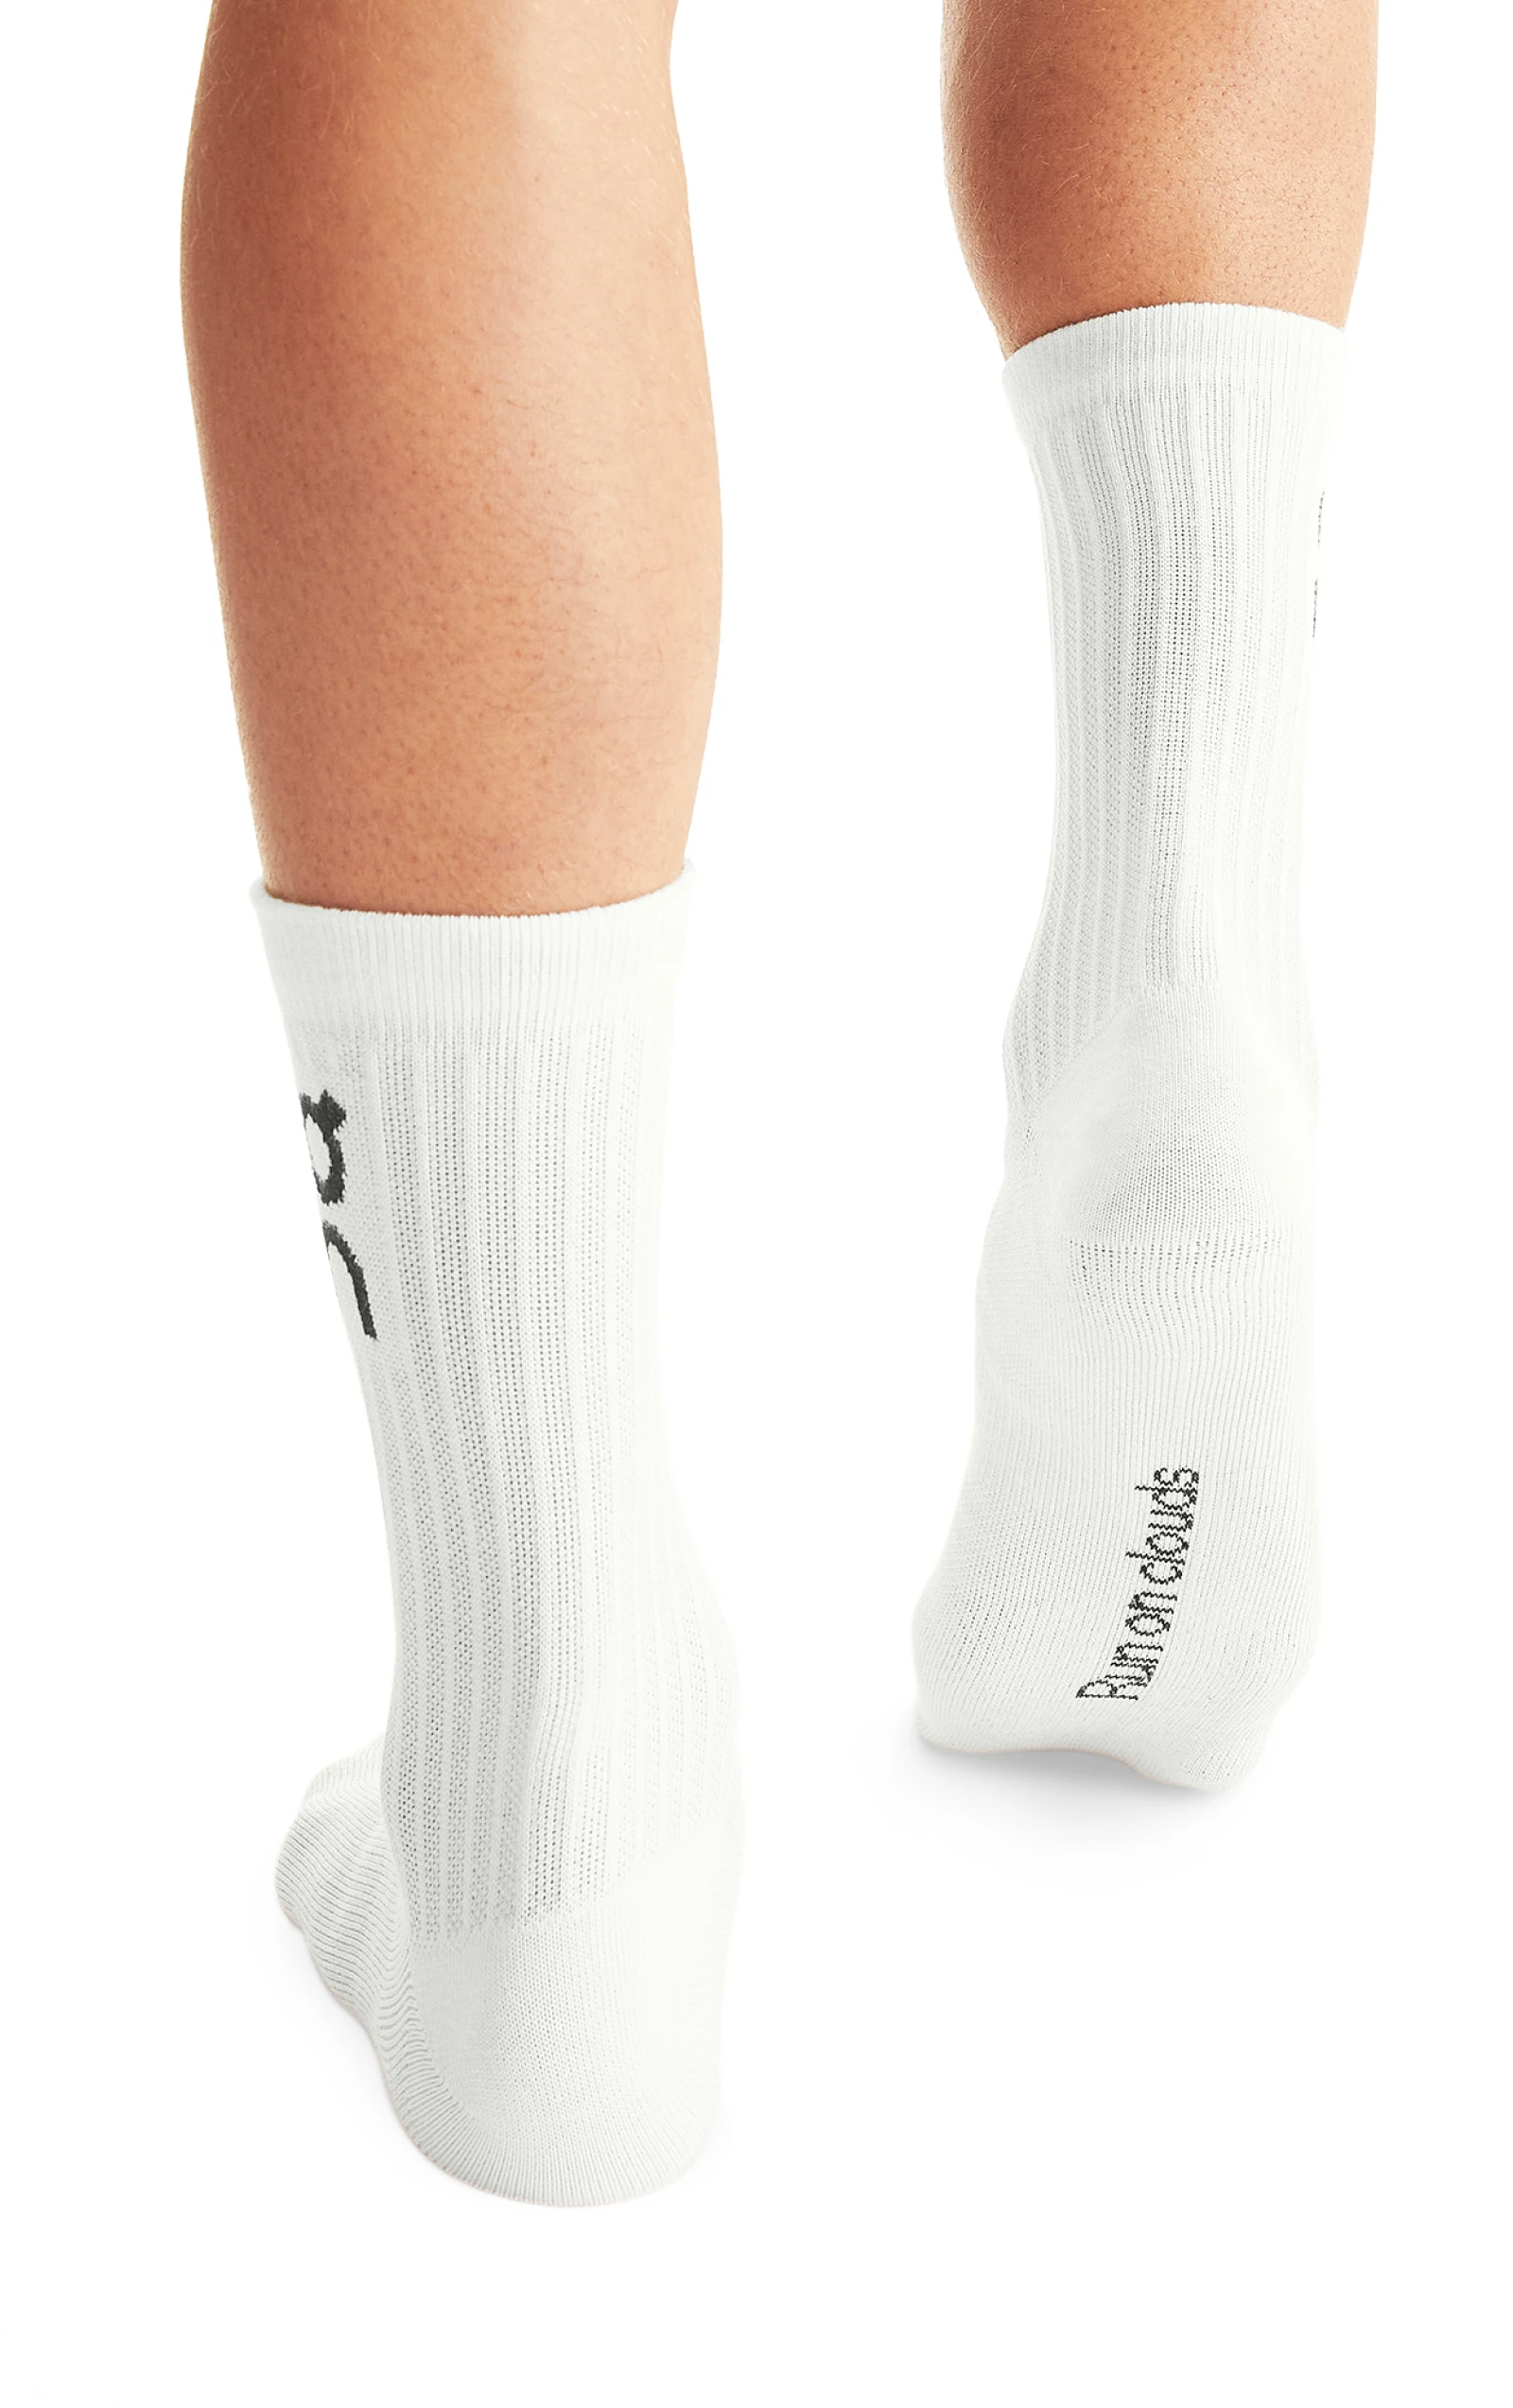 Crea Socks 3 PACK THERMAL SOCKS WOMEN - Socks - yellow/white - Zalando.de